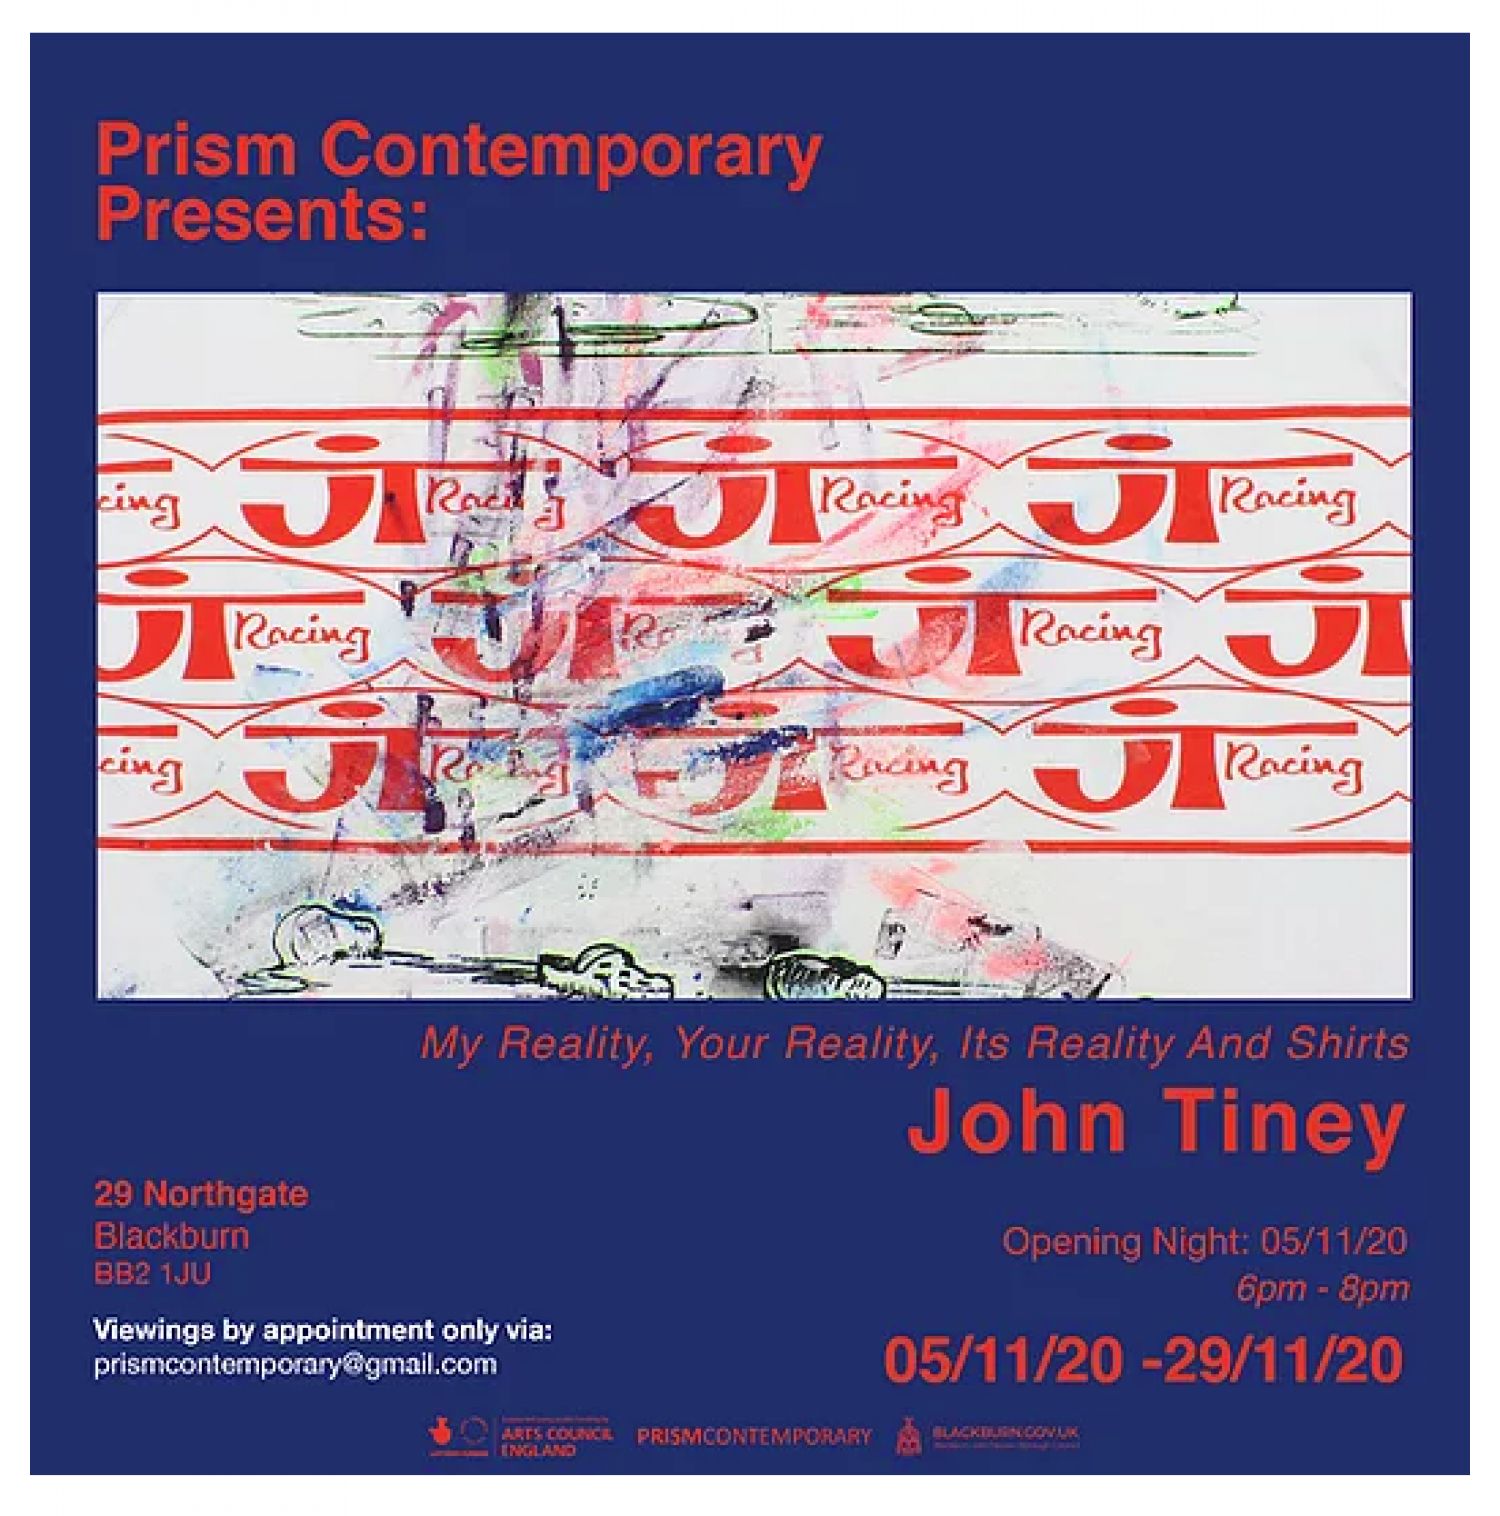 Prism Contemporary - John Tiney Exhibition